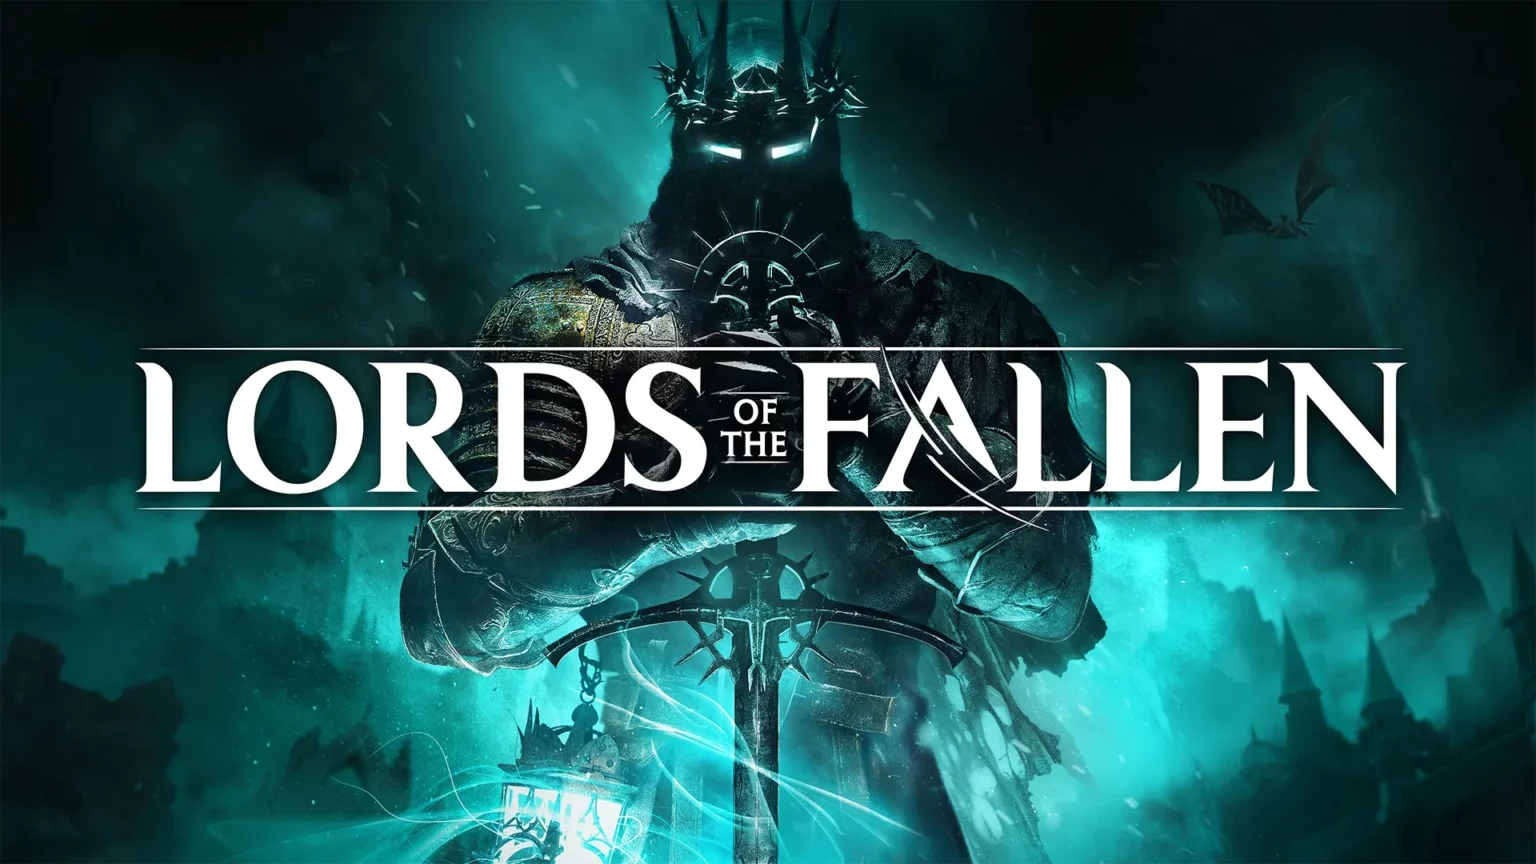 Lords of the Fallen Xbox Series XS Mídia Digital - ALNGAMES - JOGOS EM  MÍDIA DIGITAL